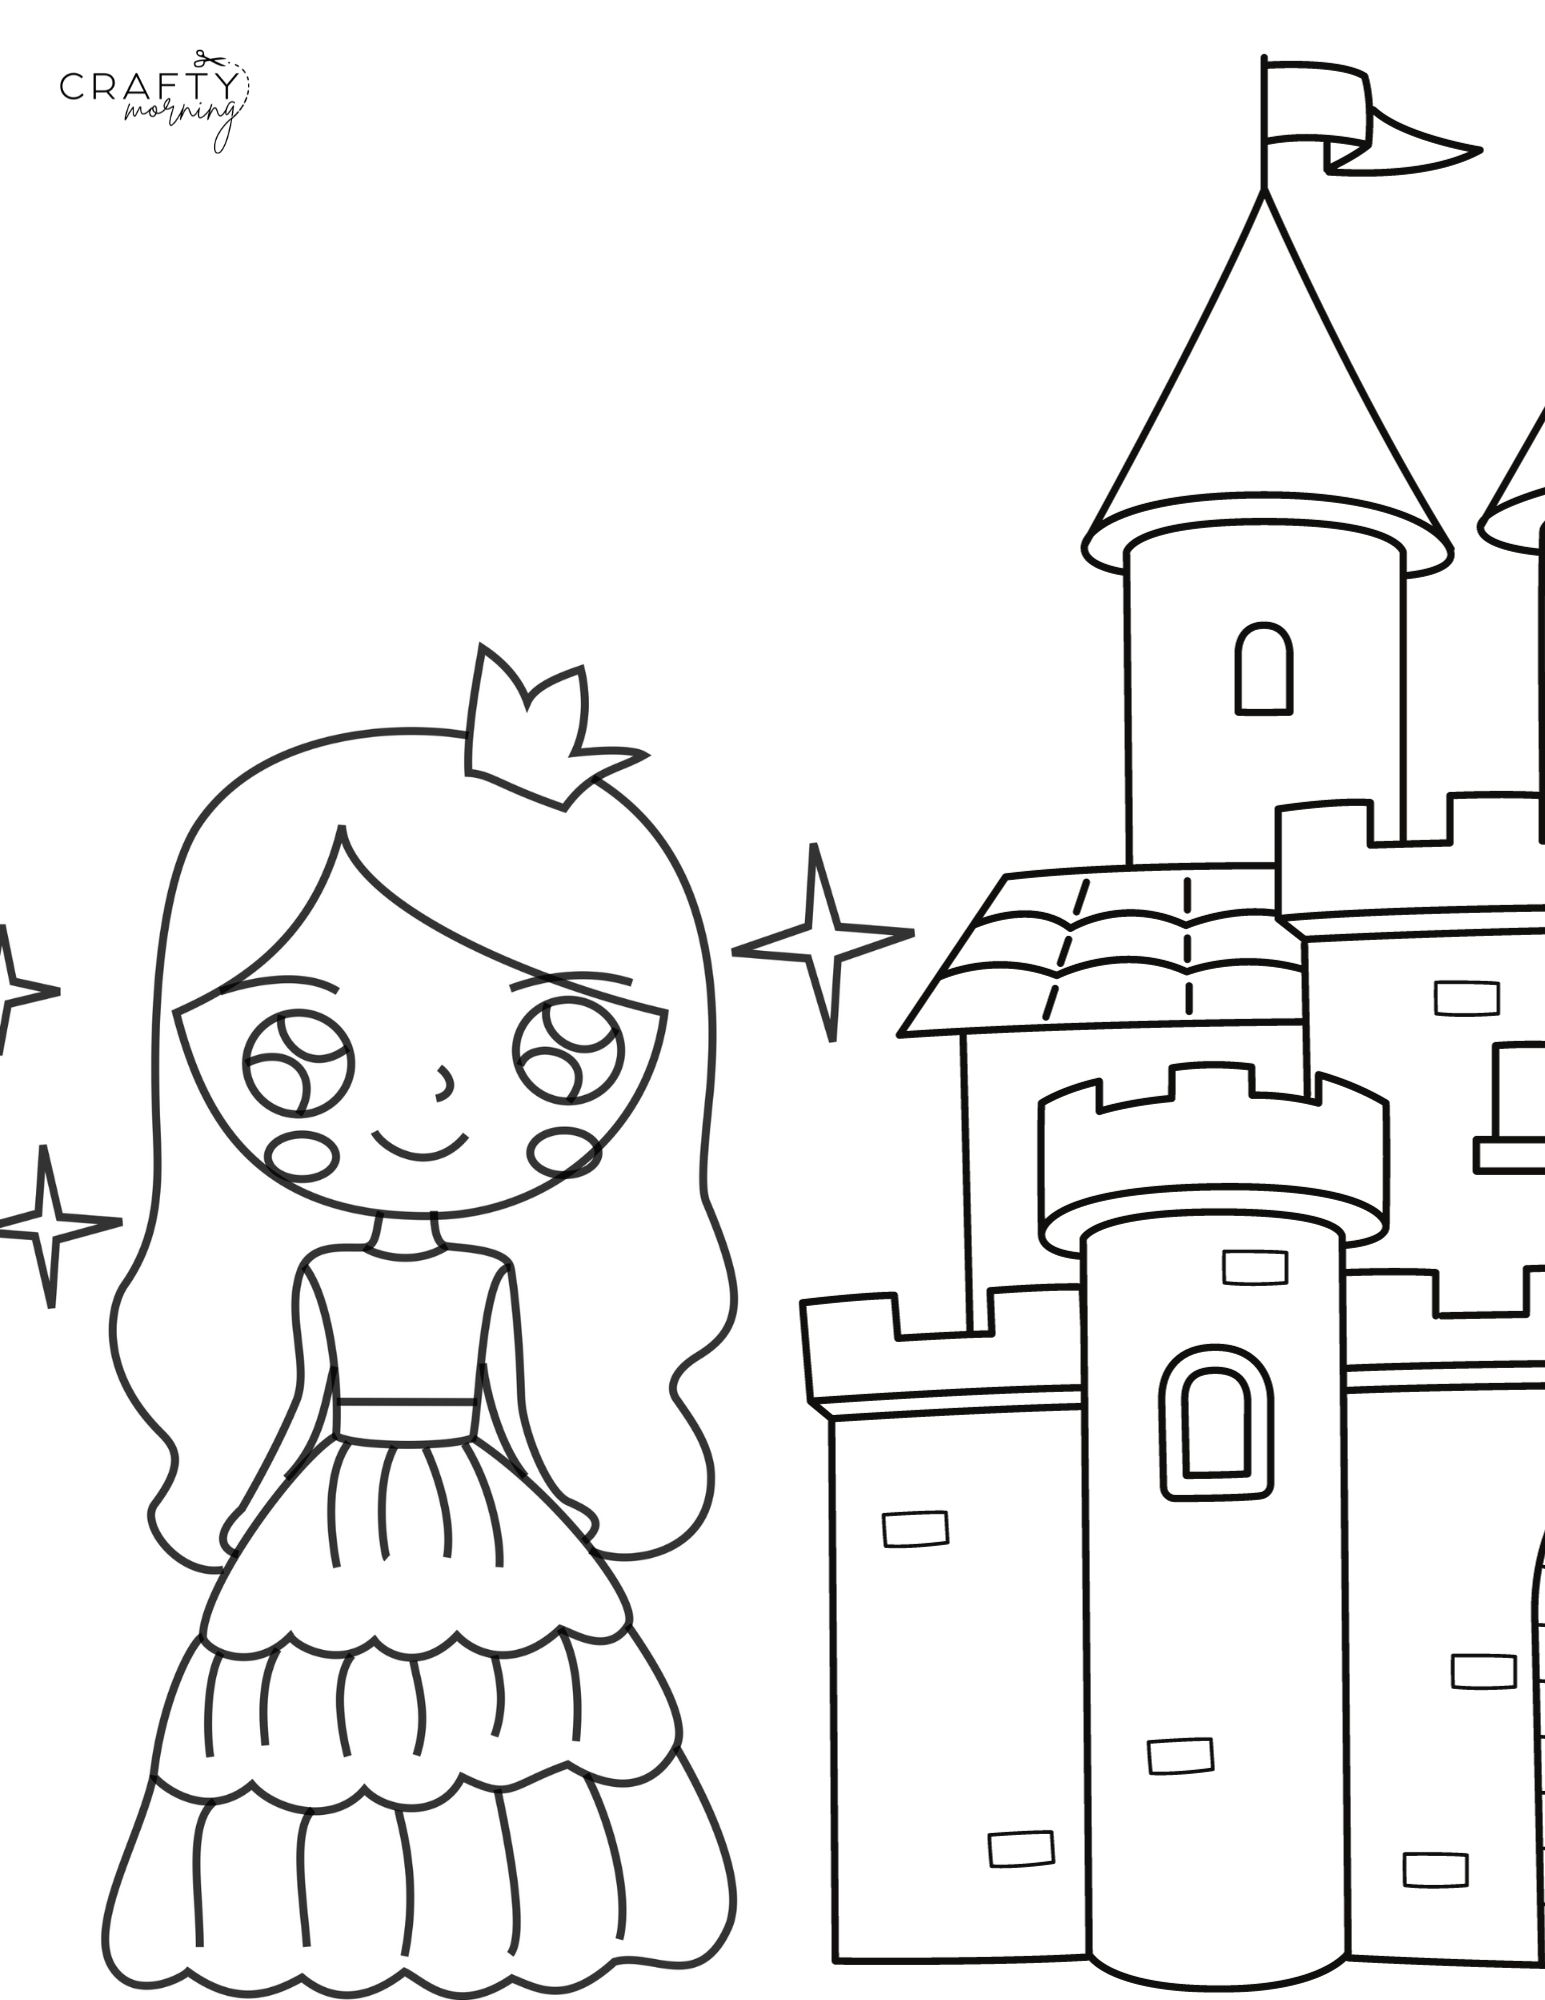 Princess Drawing (Step by Step Tutorial) - Crafty Morning